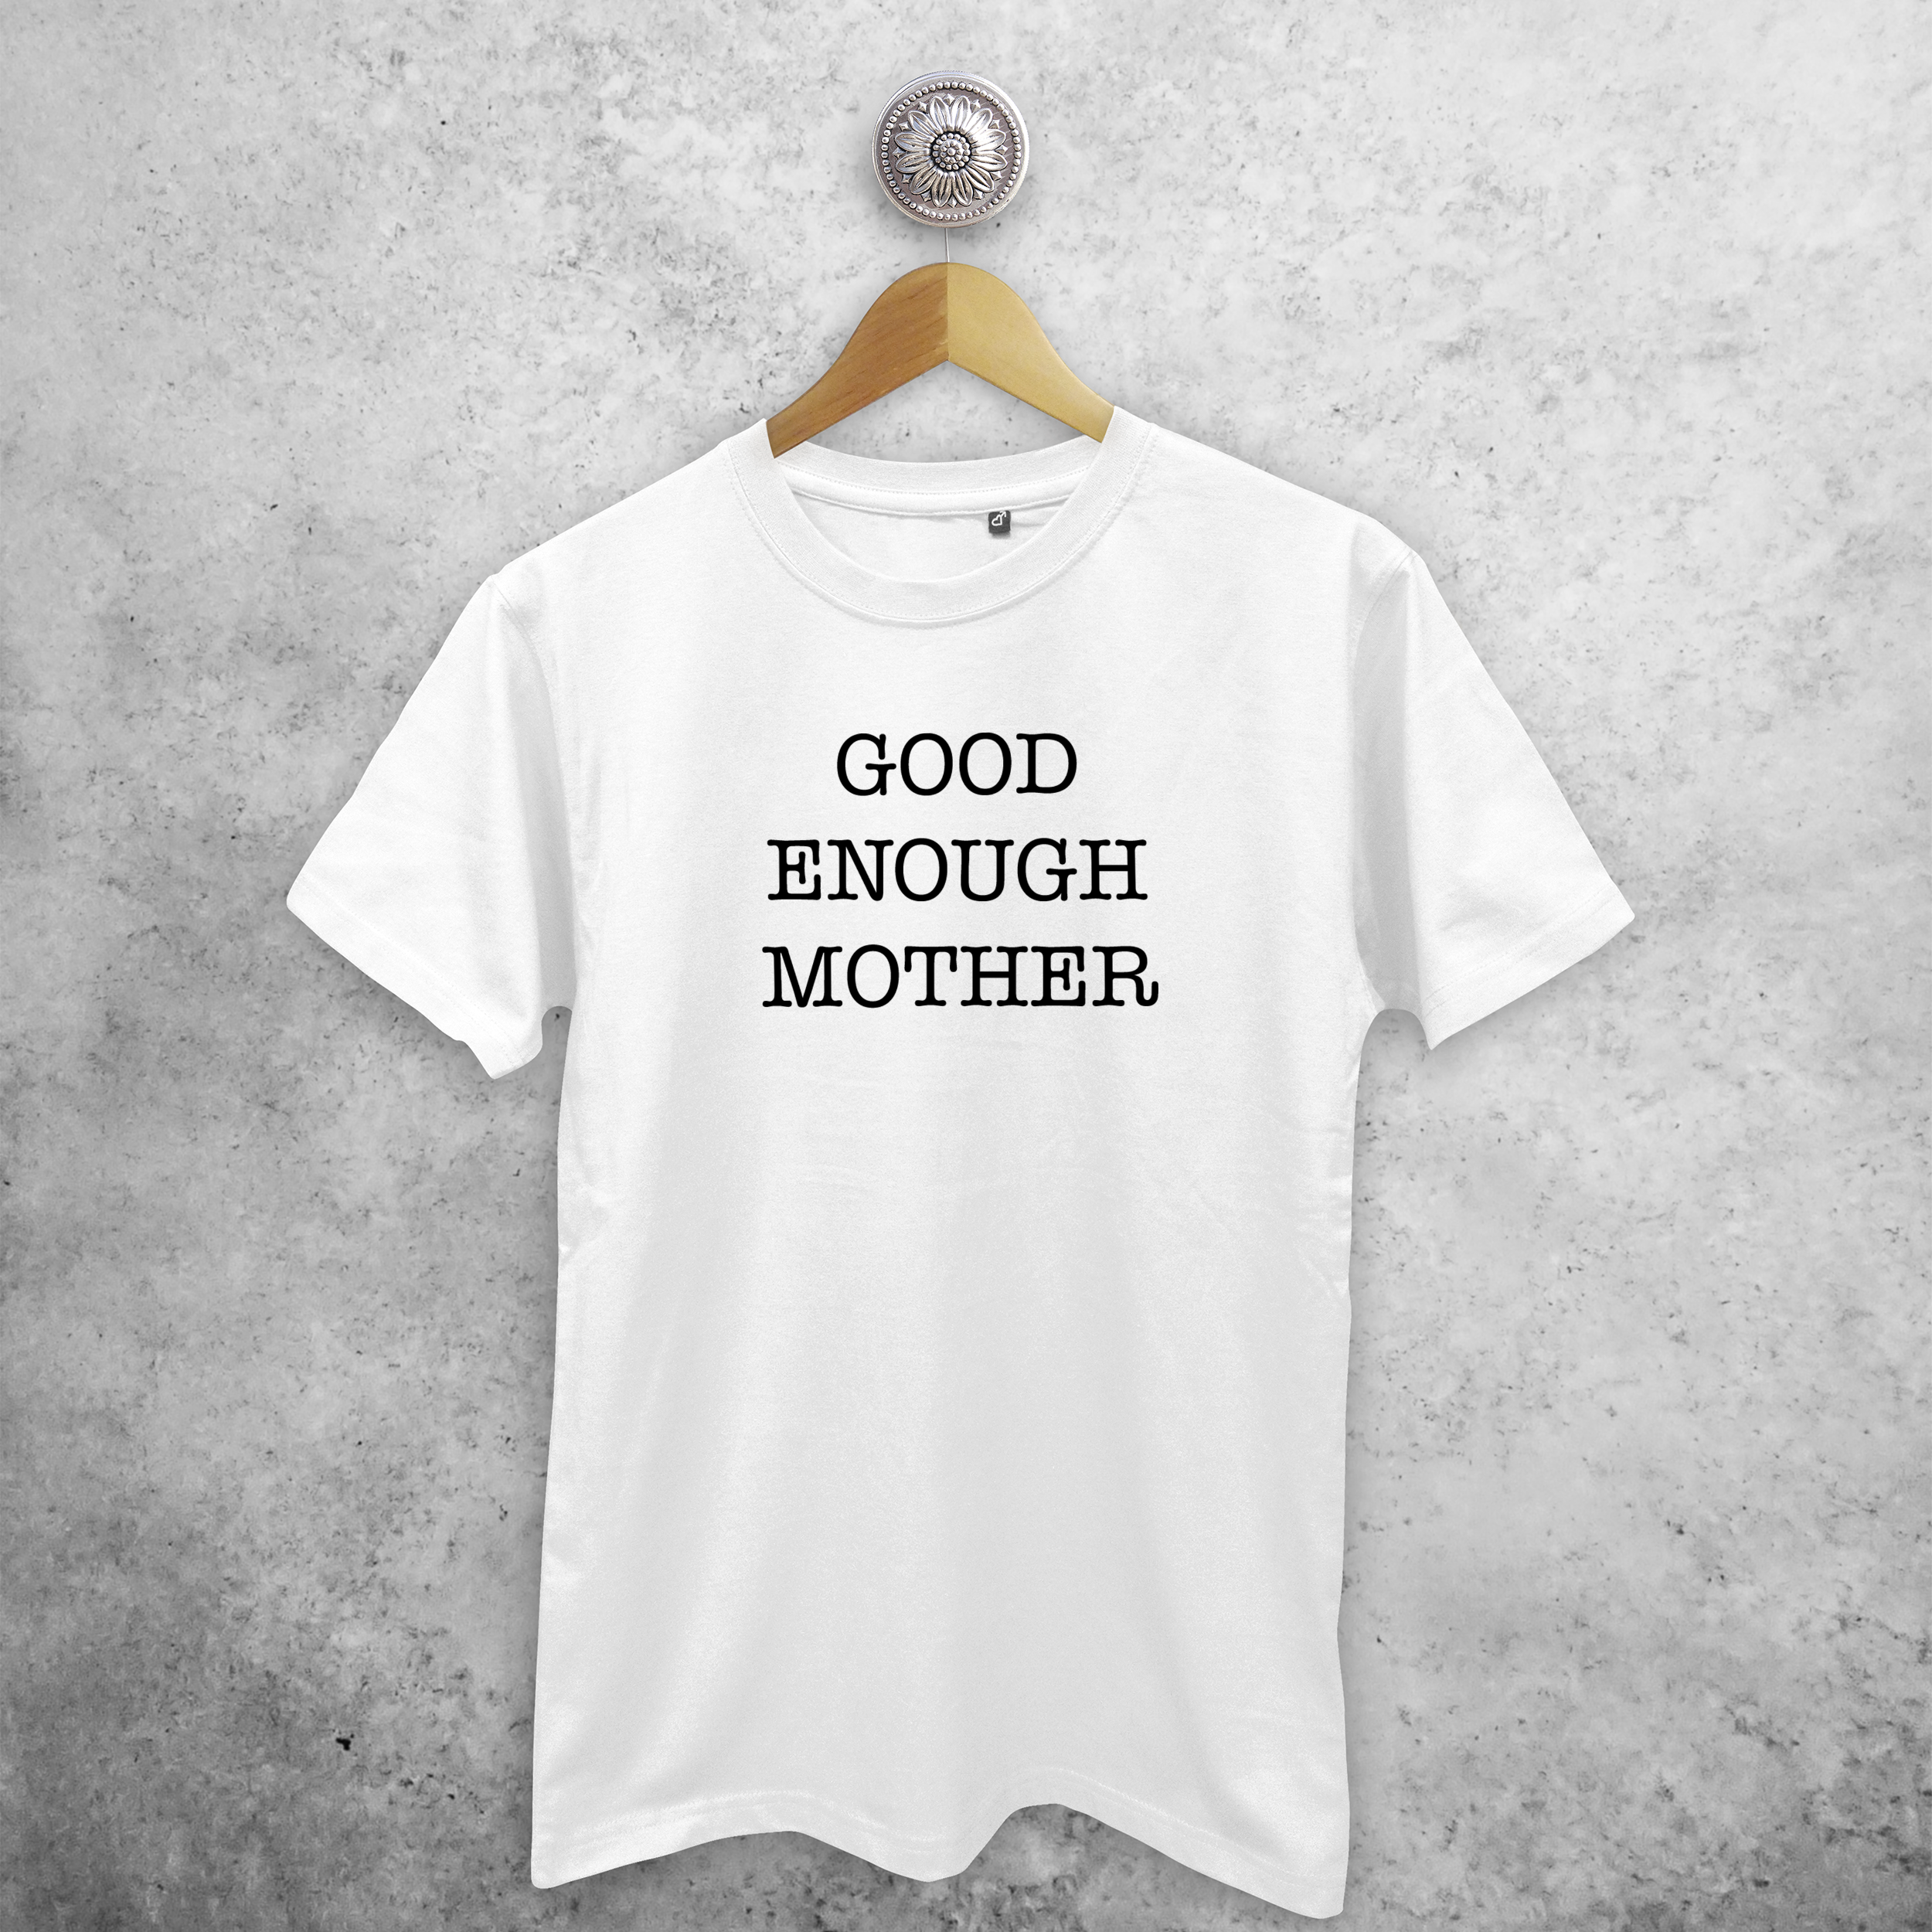 'Good enough mother' adult shirt